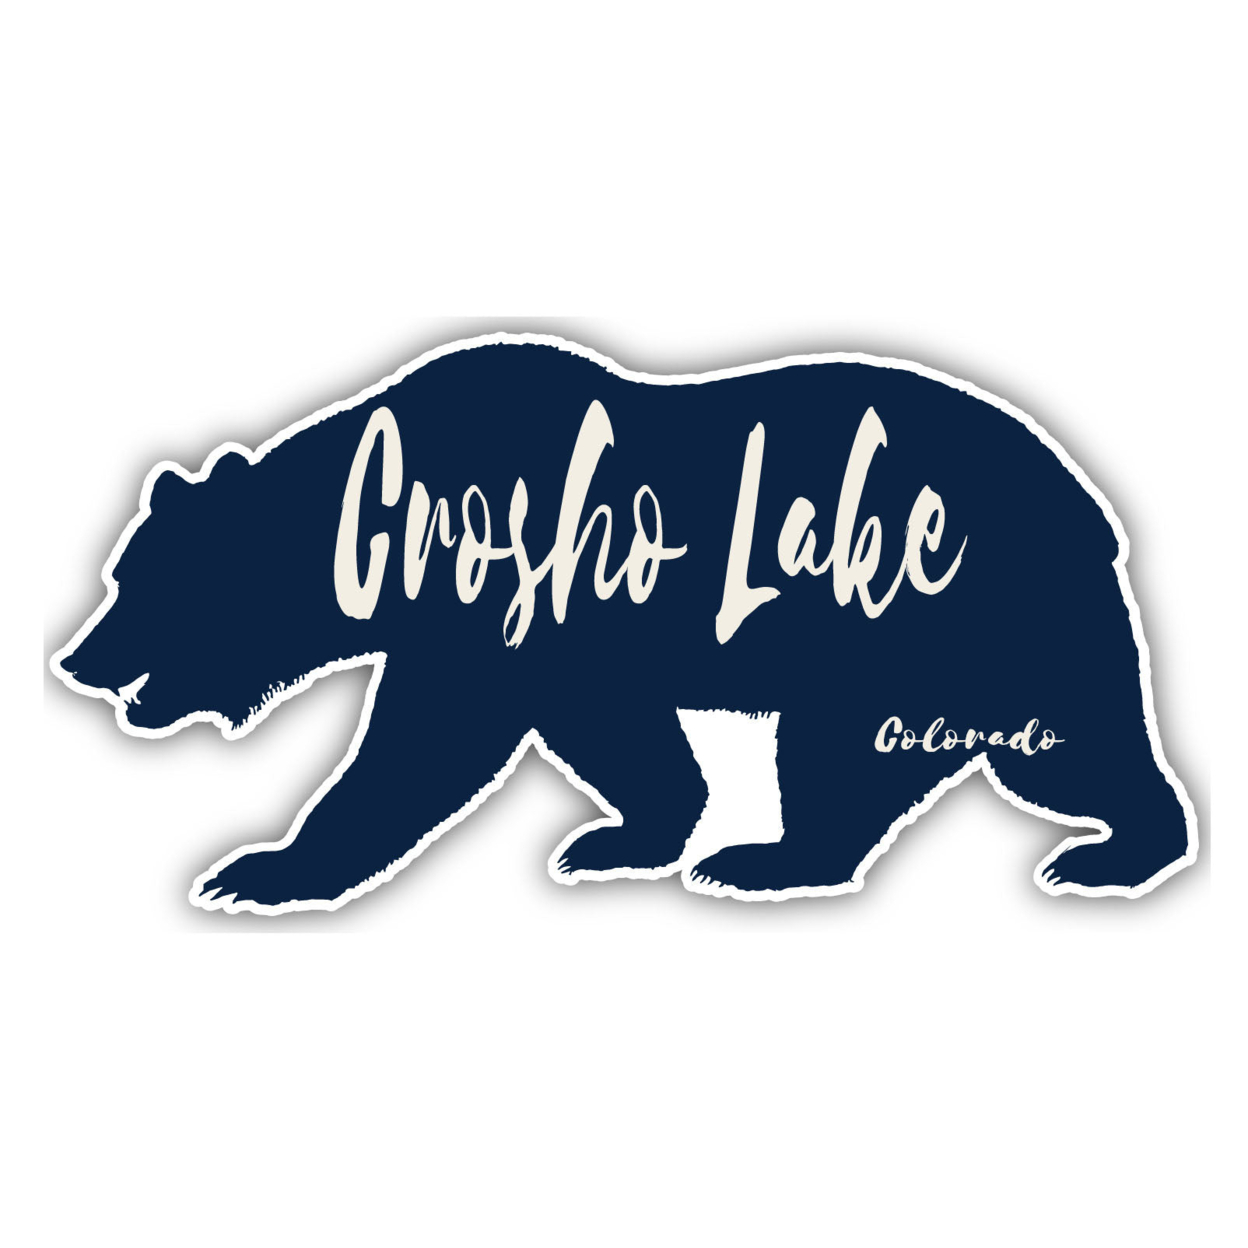 Crosho Lake Colorado Souvenir Decorative Stickers (Choose Theme And Size) - Single Unit, 8-Inch, Bear